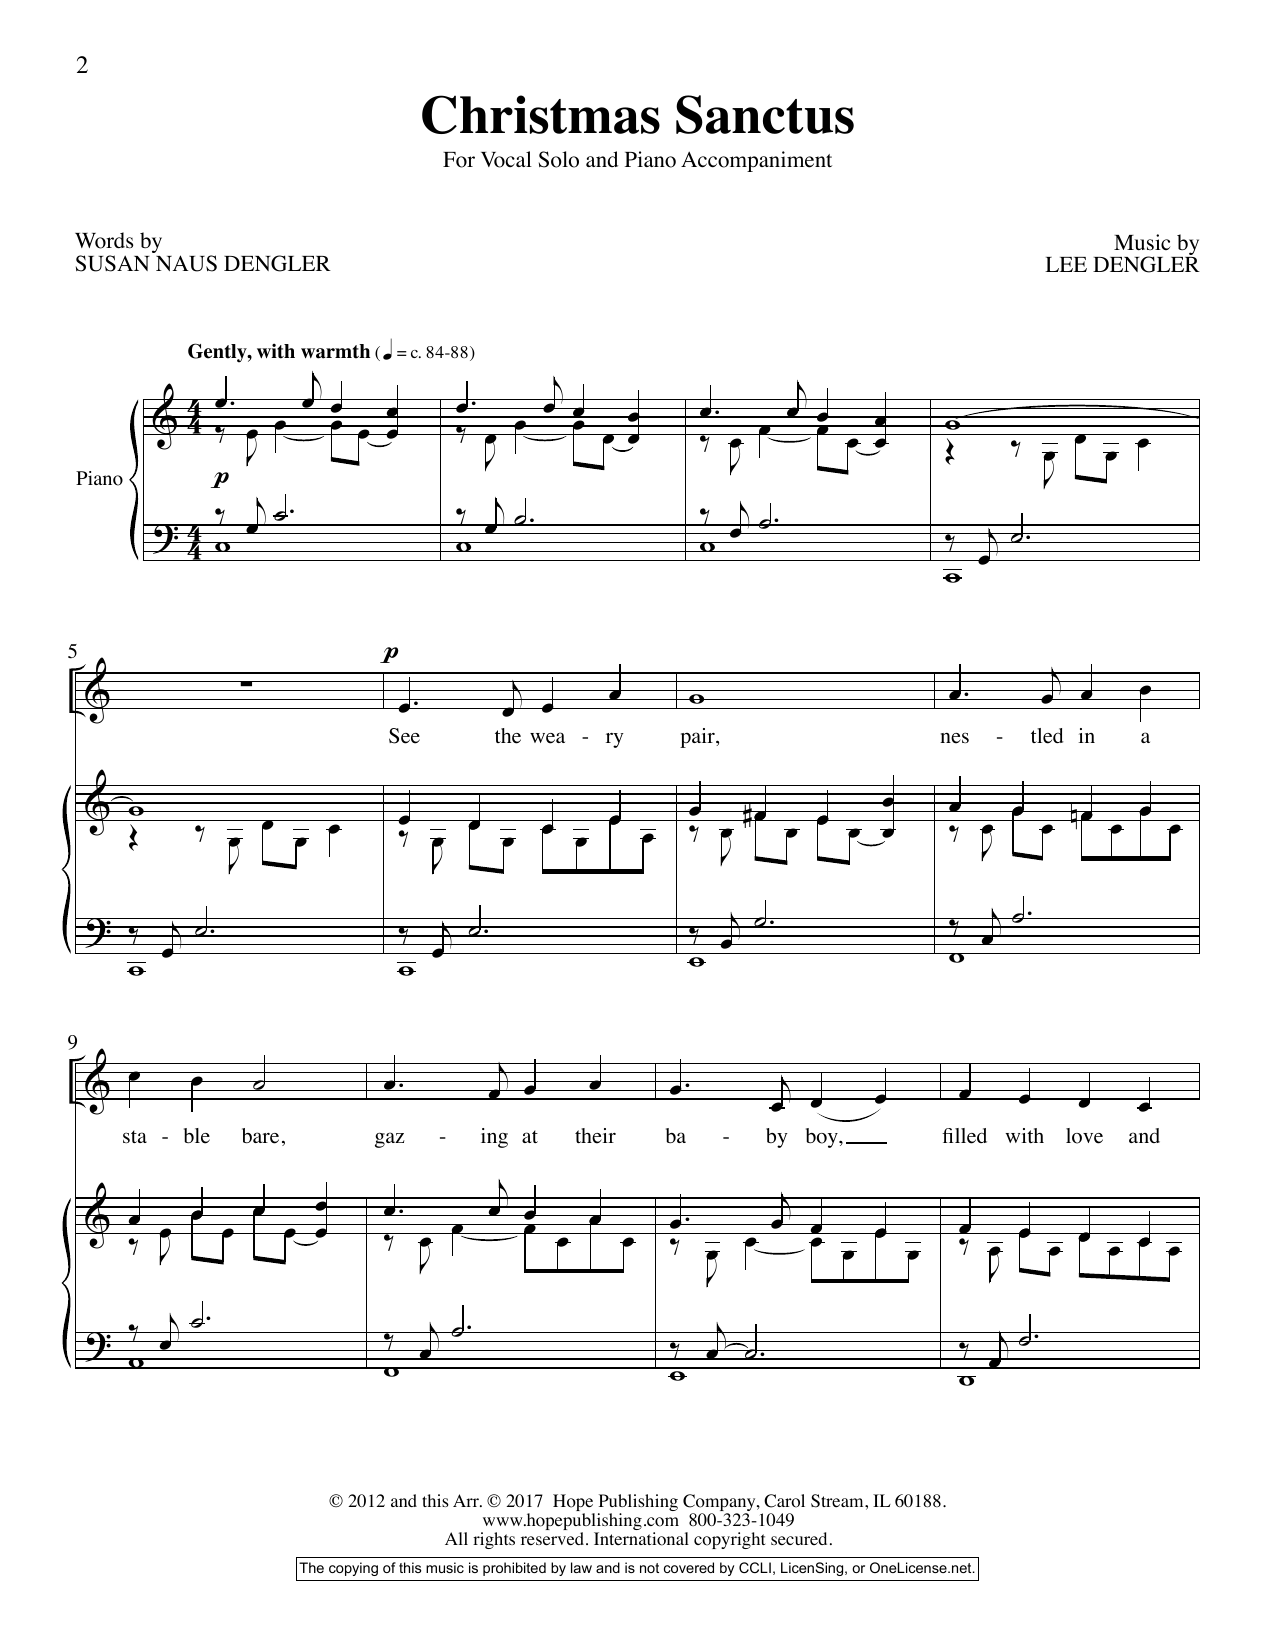 Susan Naus Dengler Christmas Sanctus Sheet Music Notes & Chords for Piano & Vocal - Download or Print PDF